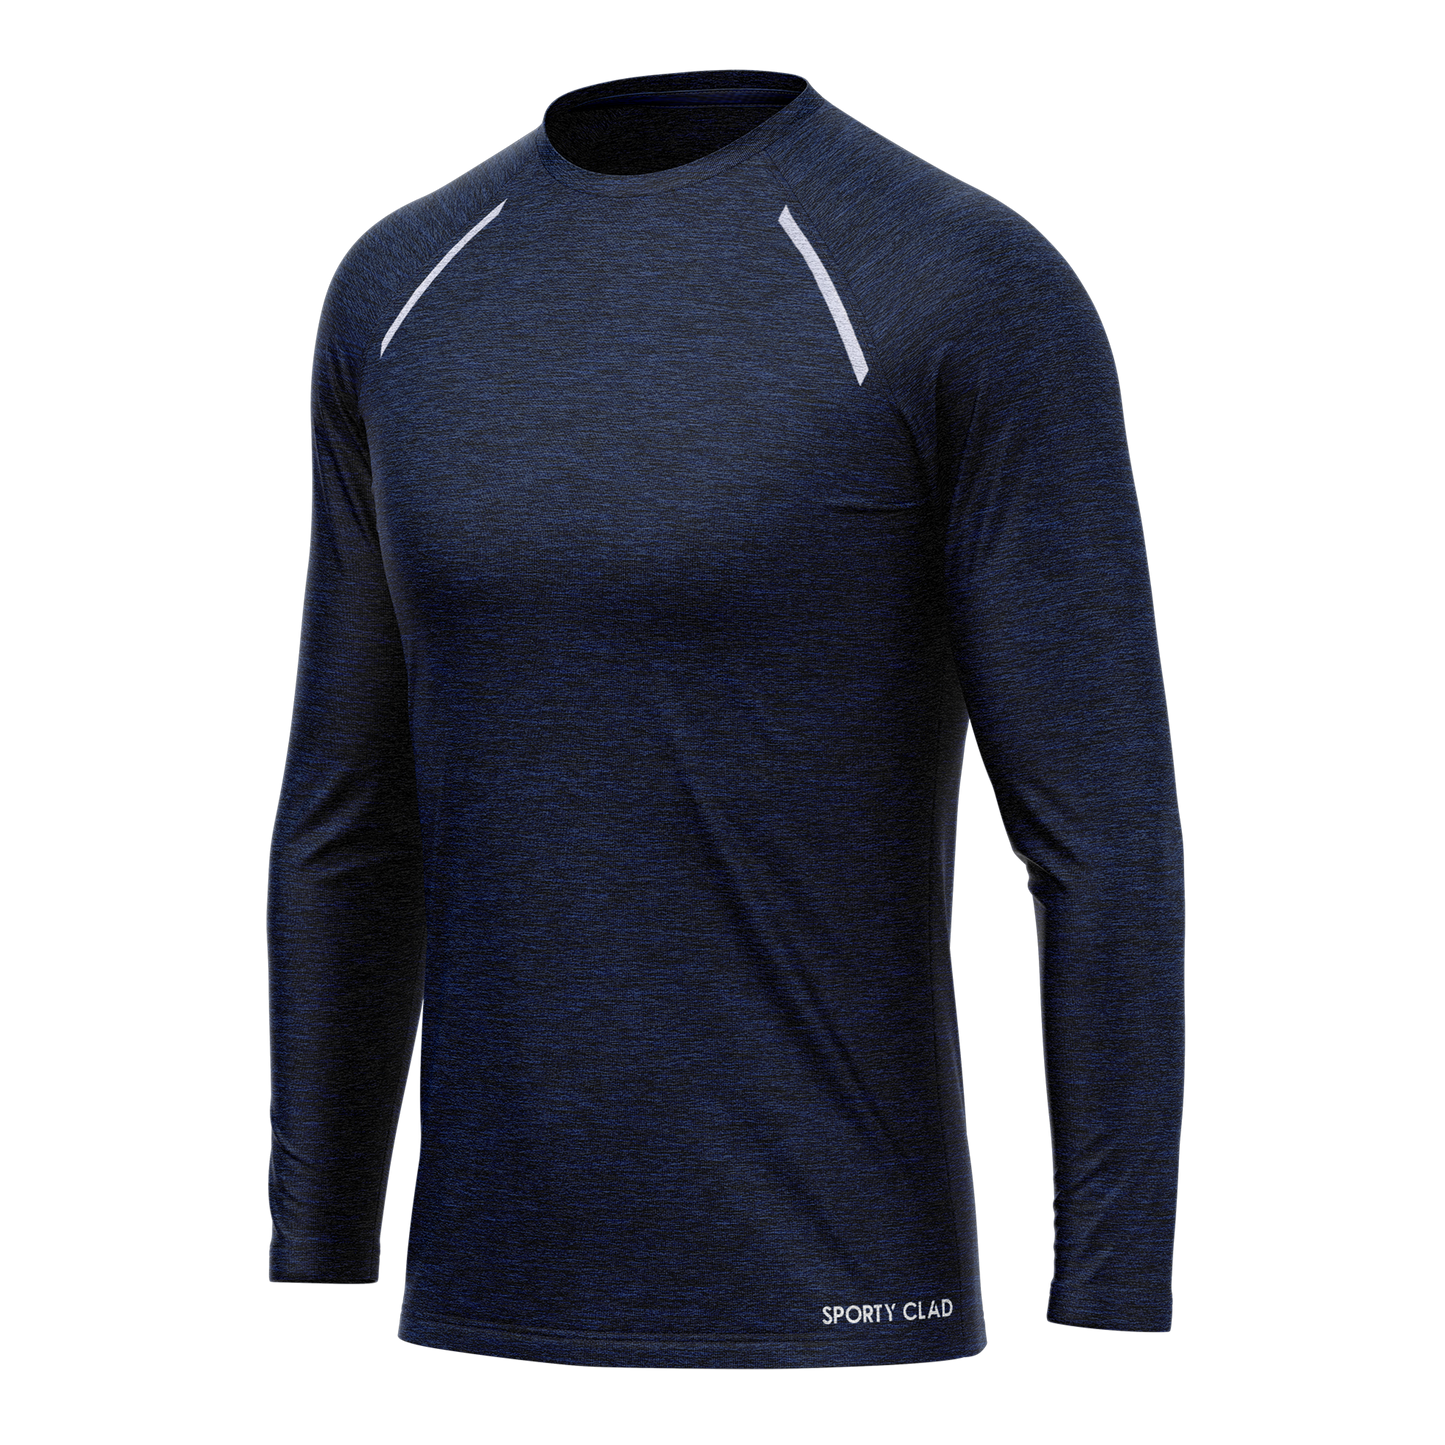 Men's Blue Long Sleeve Thermal T-Shirt